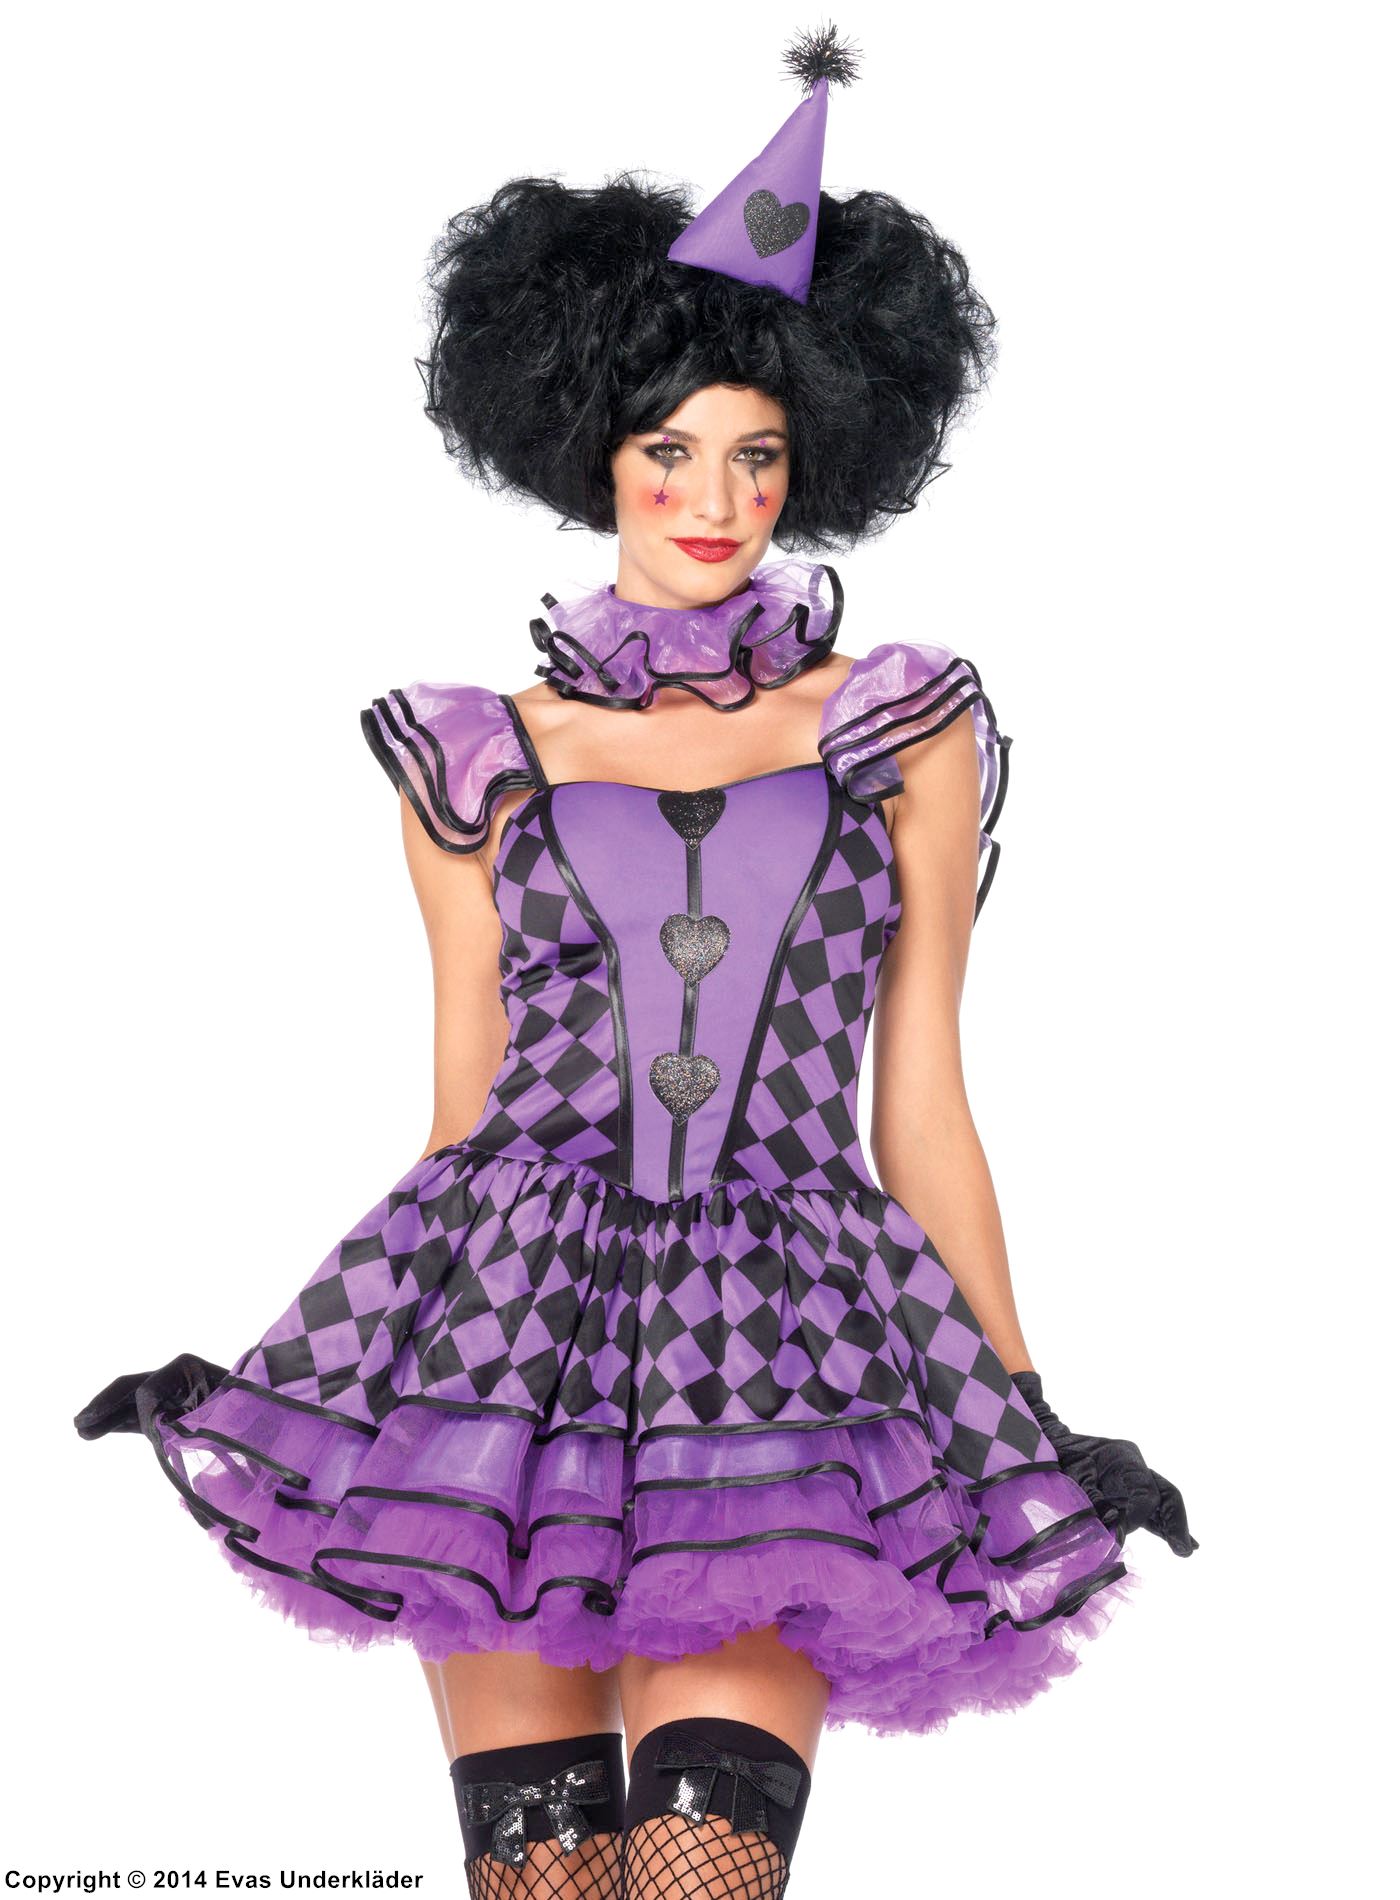 Female clown, costume dress, ruffles, hearts, checkered pattern